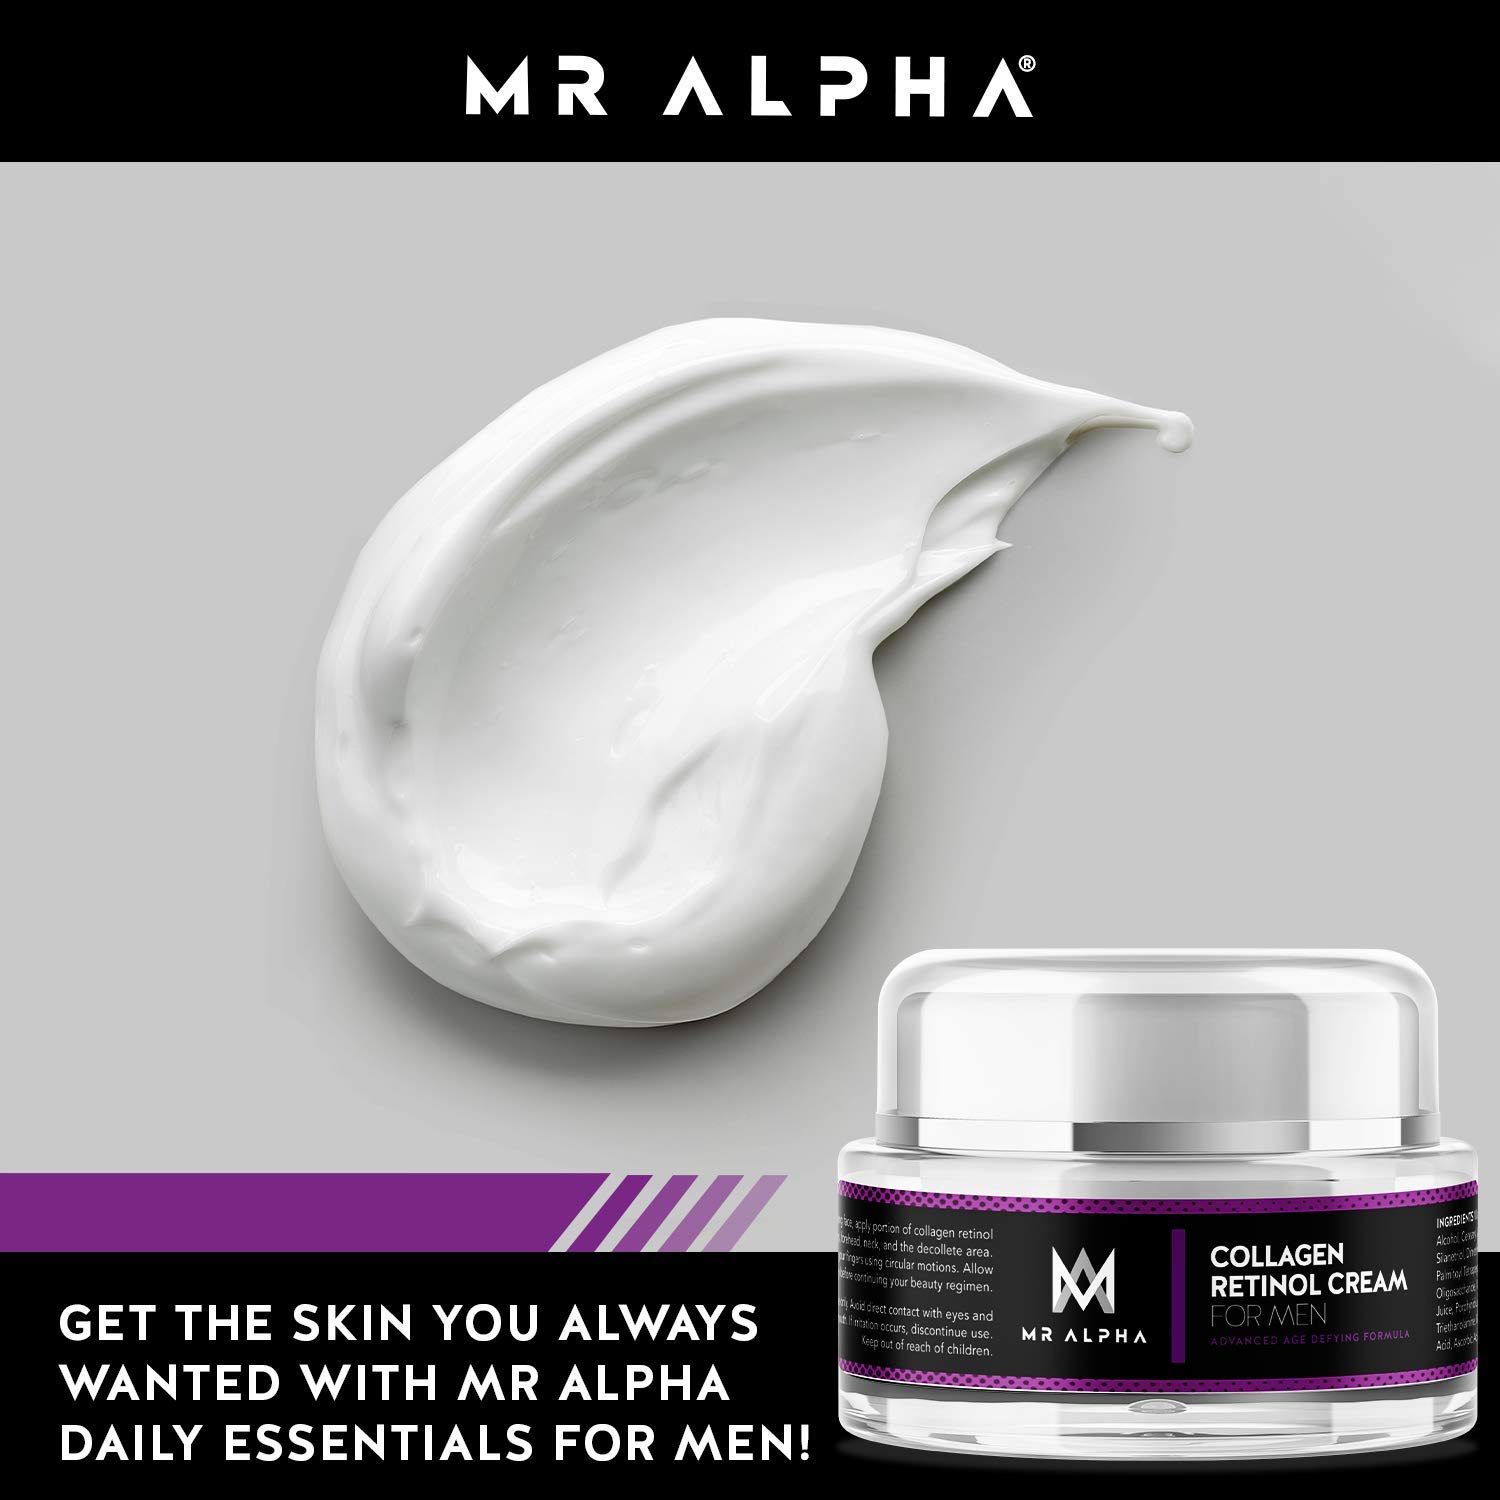 MR ALPHA Collagen Retinol Face Cream Anti Aging Moisturizer for Men, 30ml - image 3 of 3